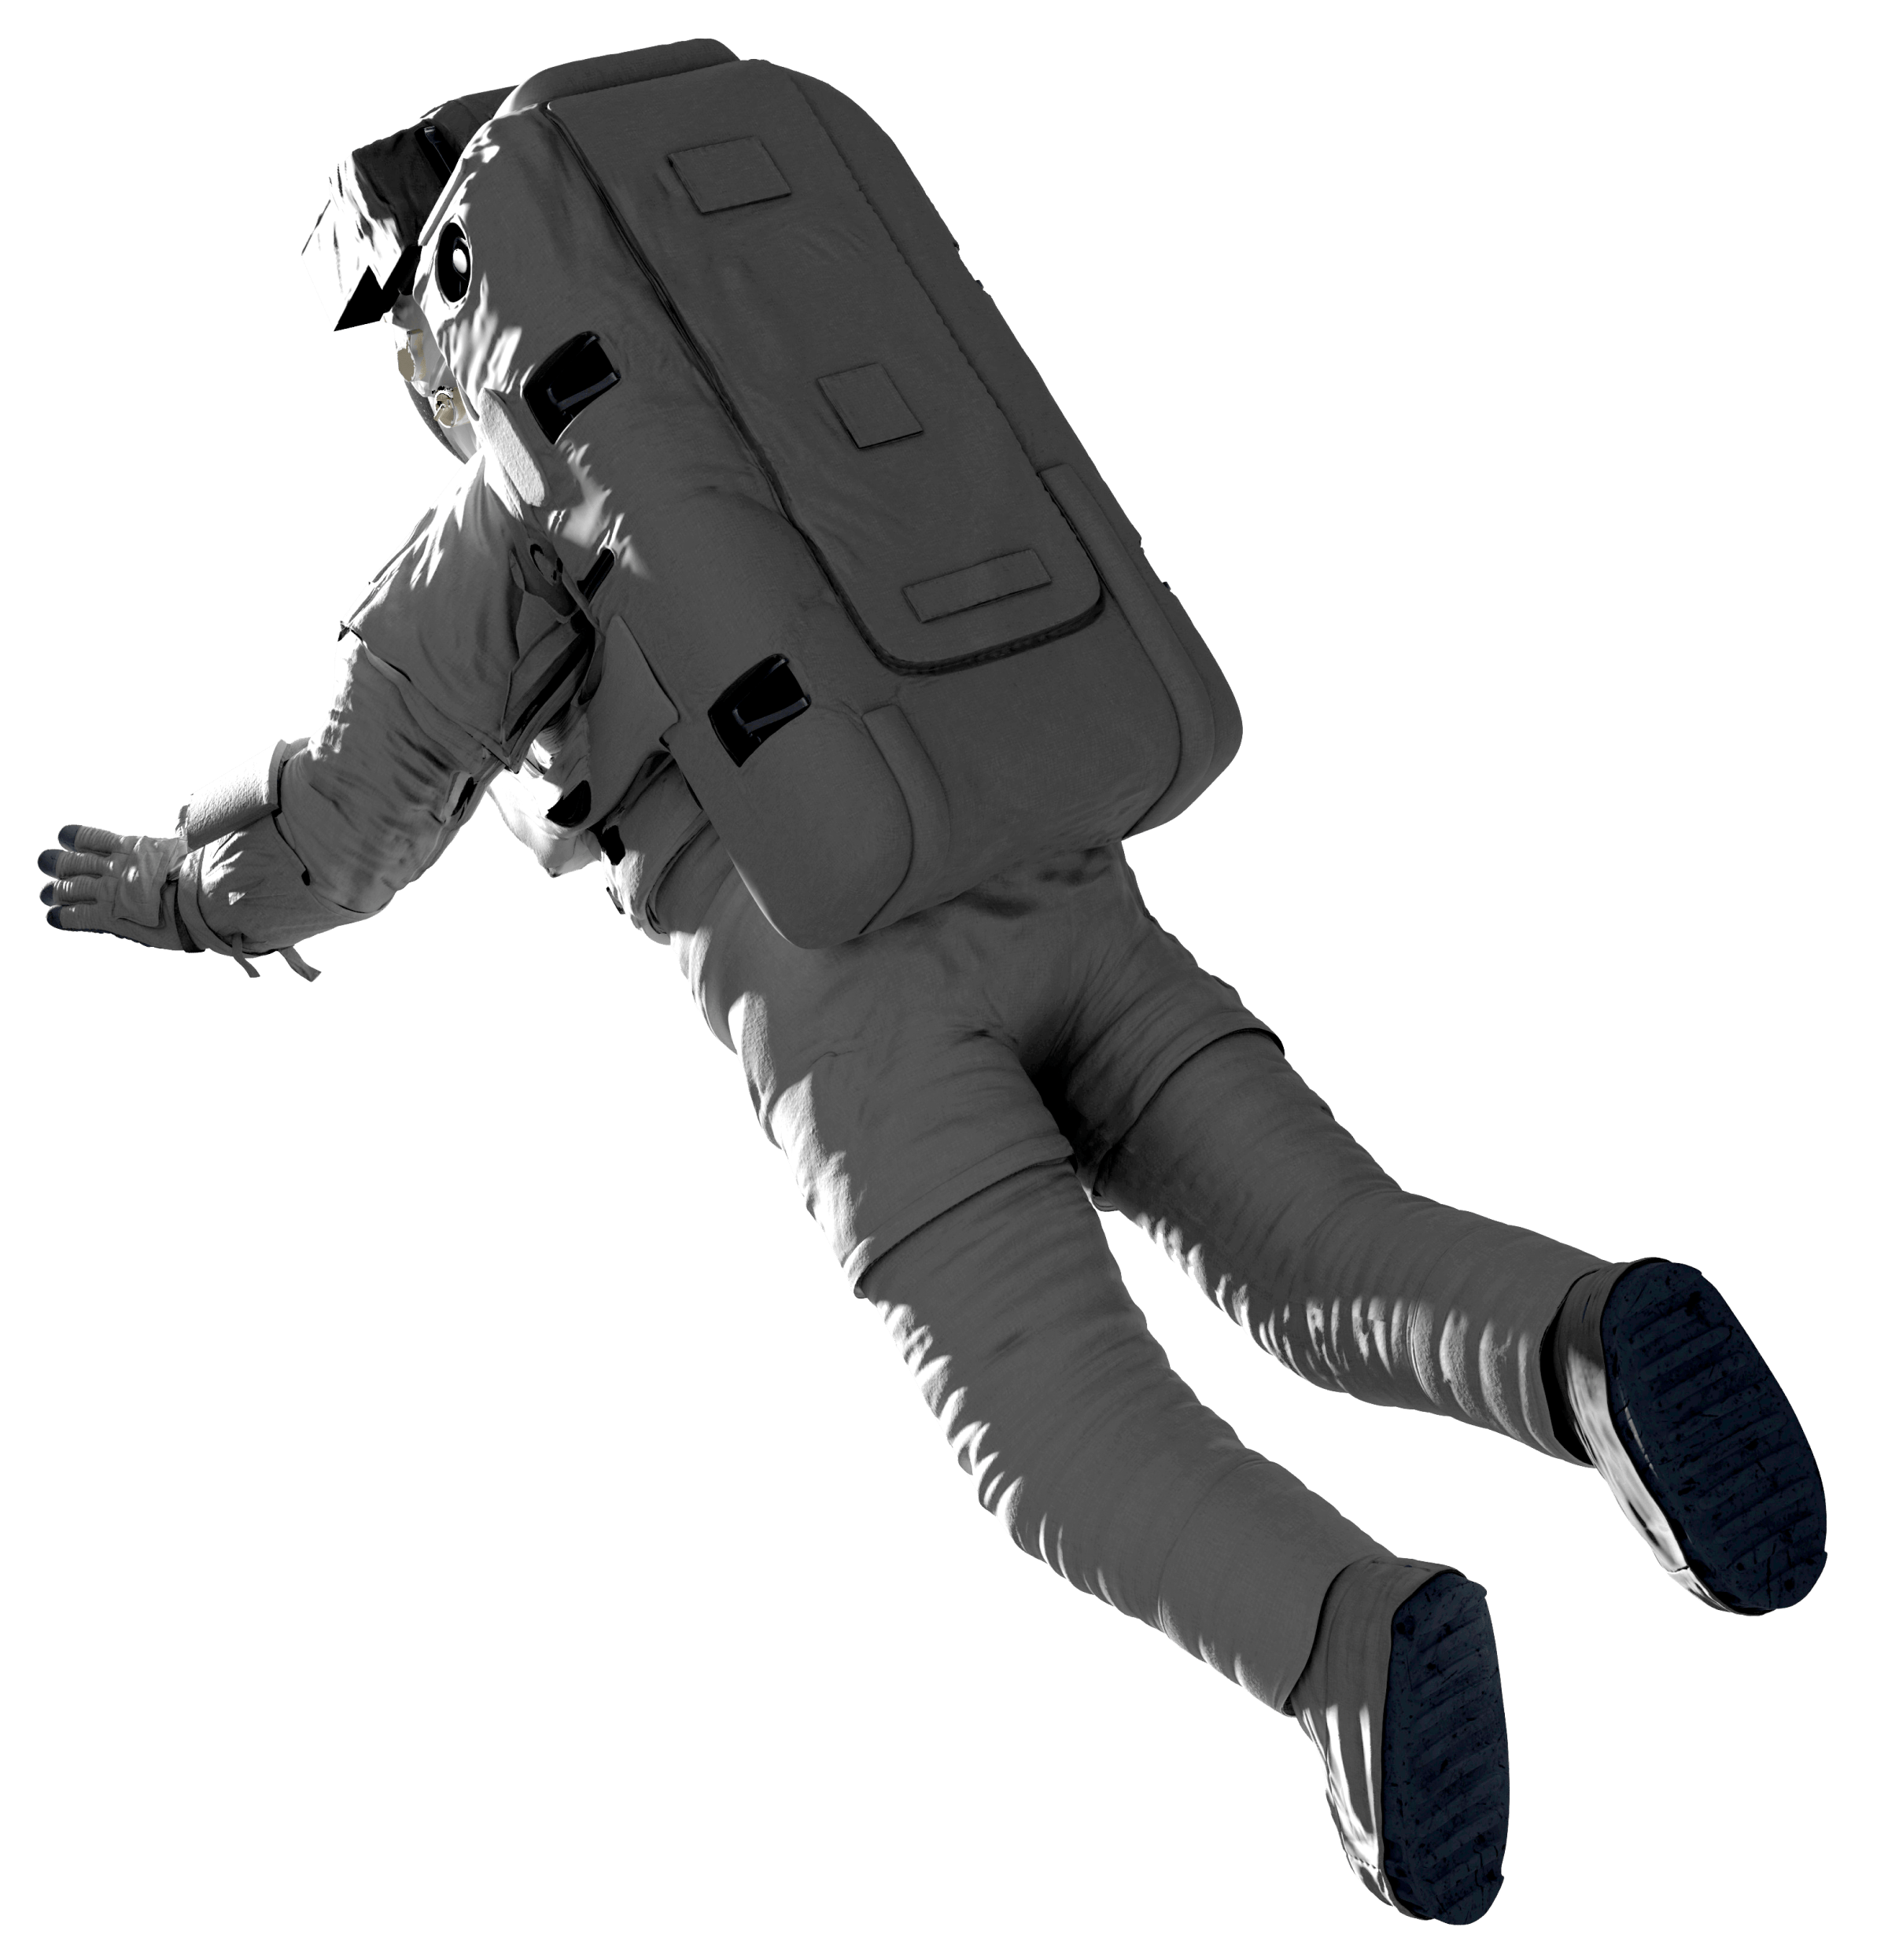 Astronaut floating